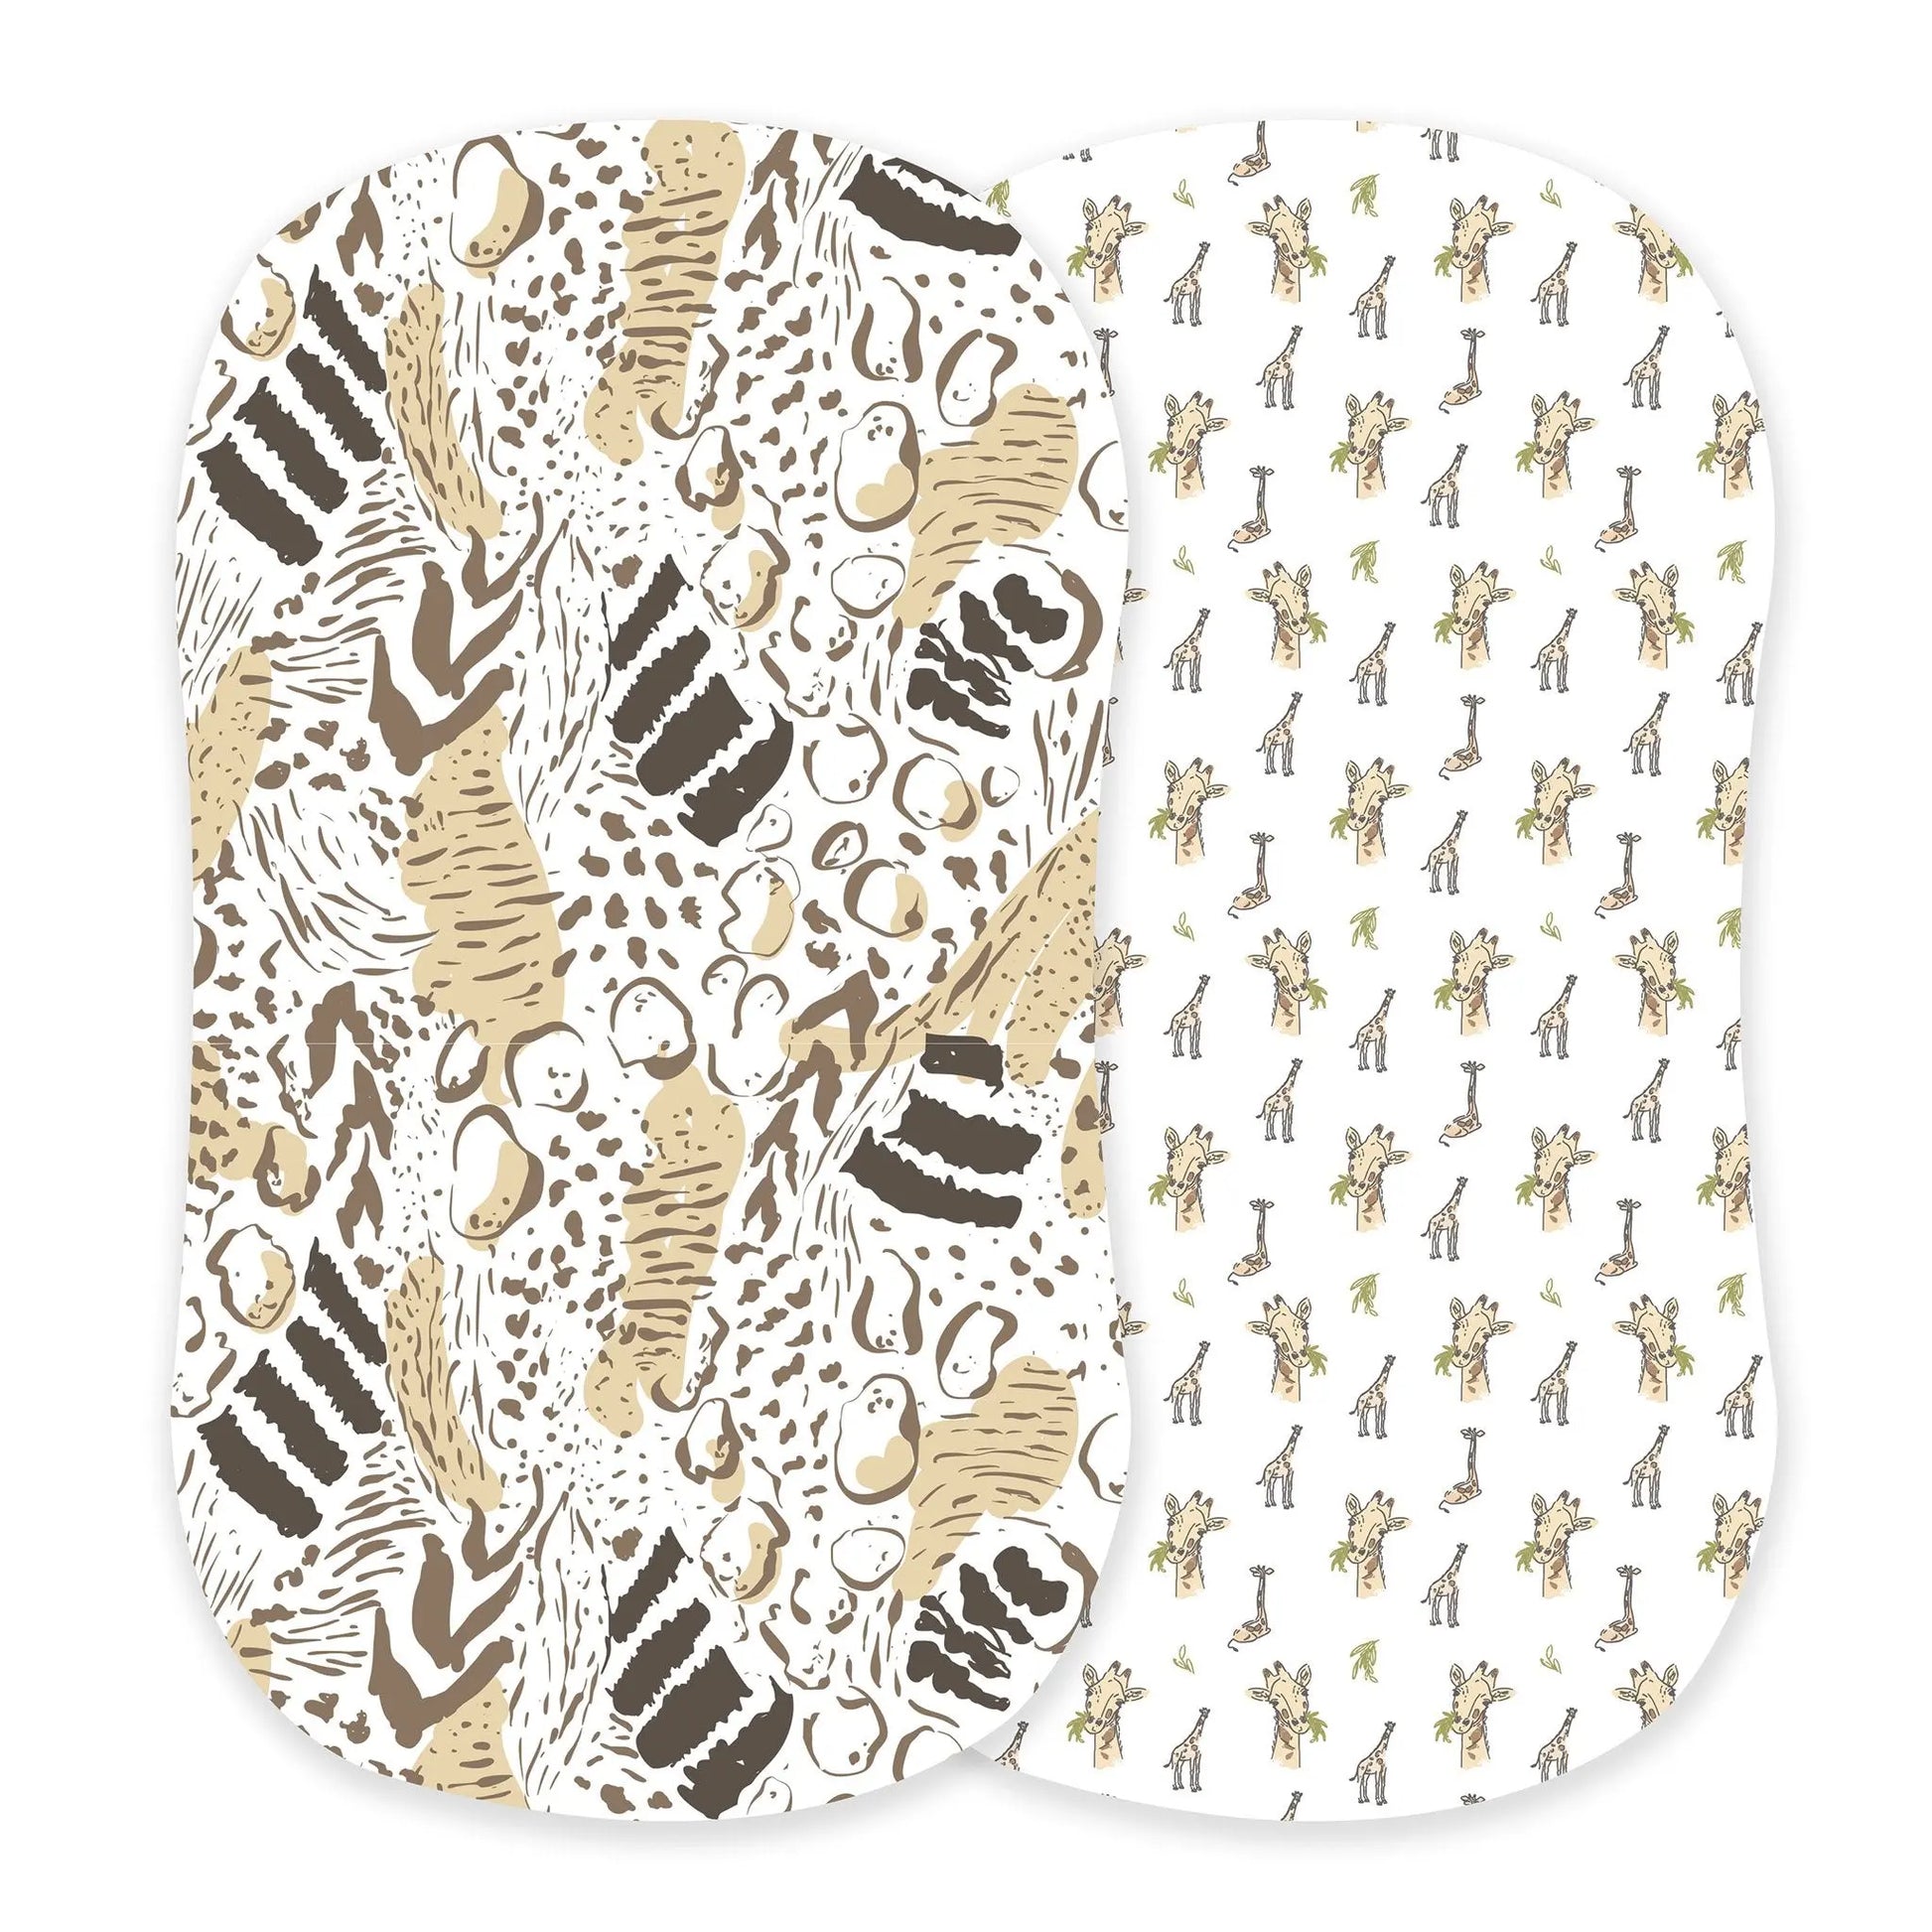 Changing Pad Cover/Bassinet Sheets 2pk| Bamboo Muslin - Animal Print & Giraffe Newcastle Classics